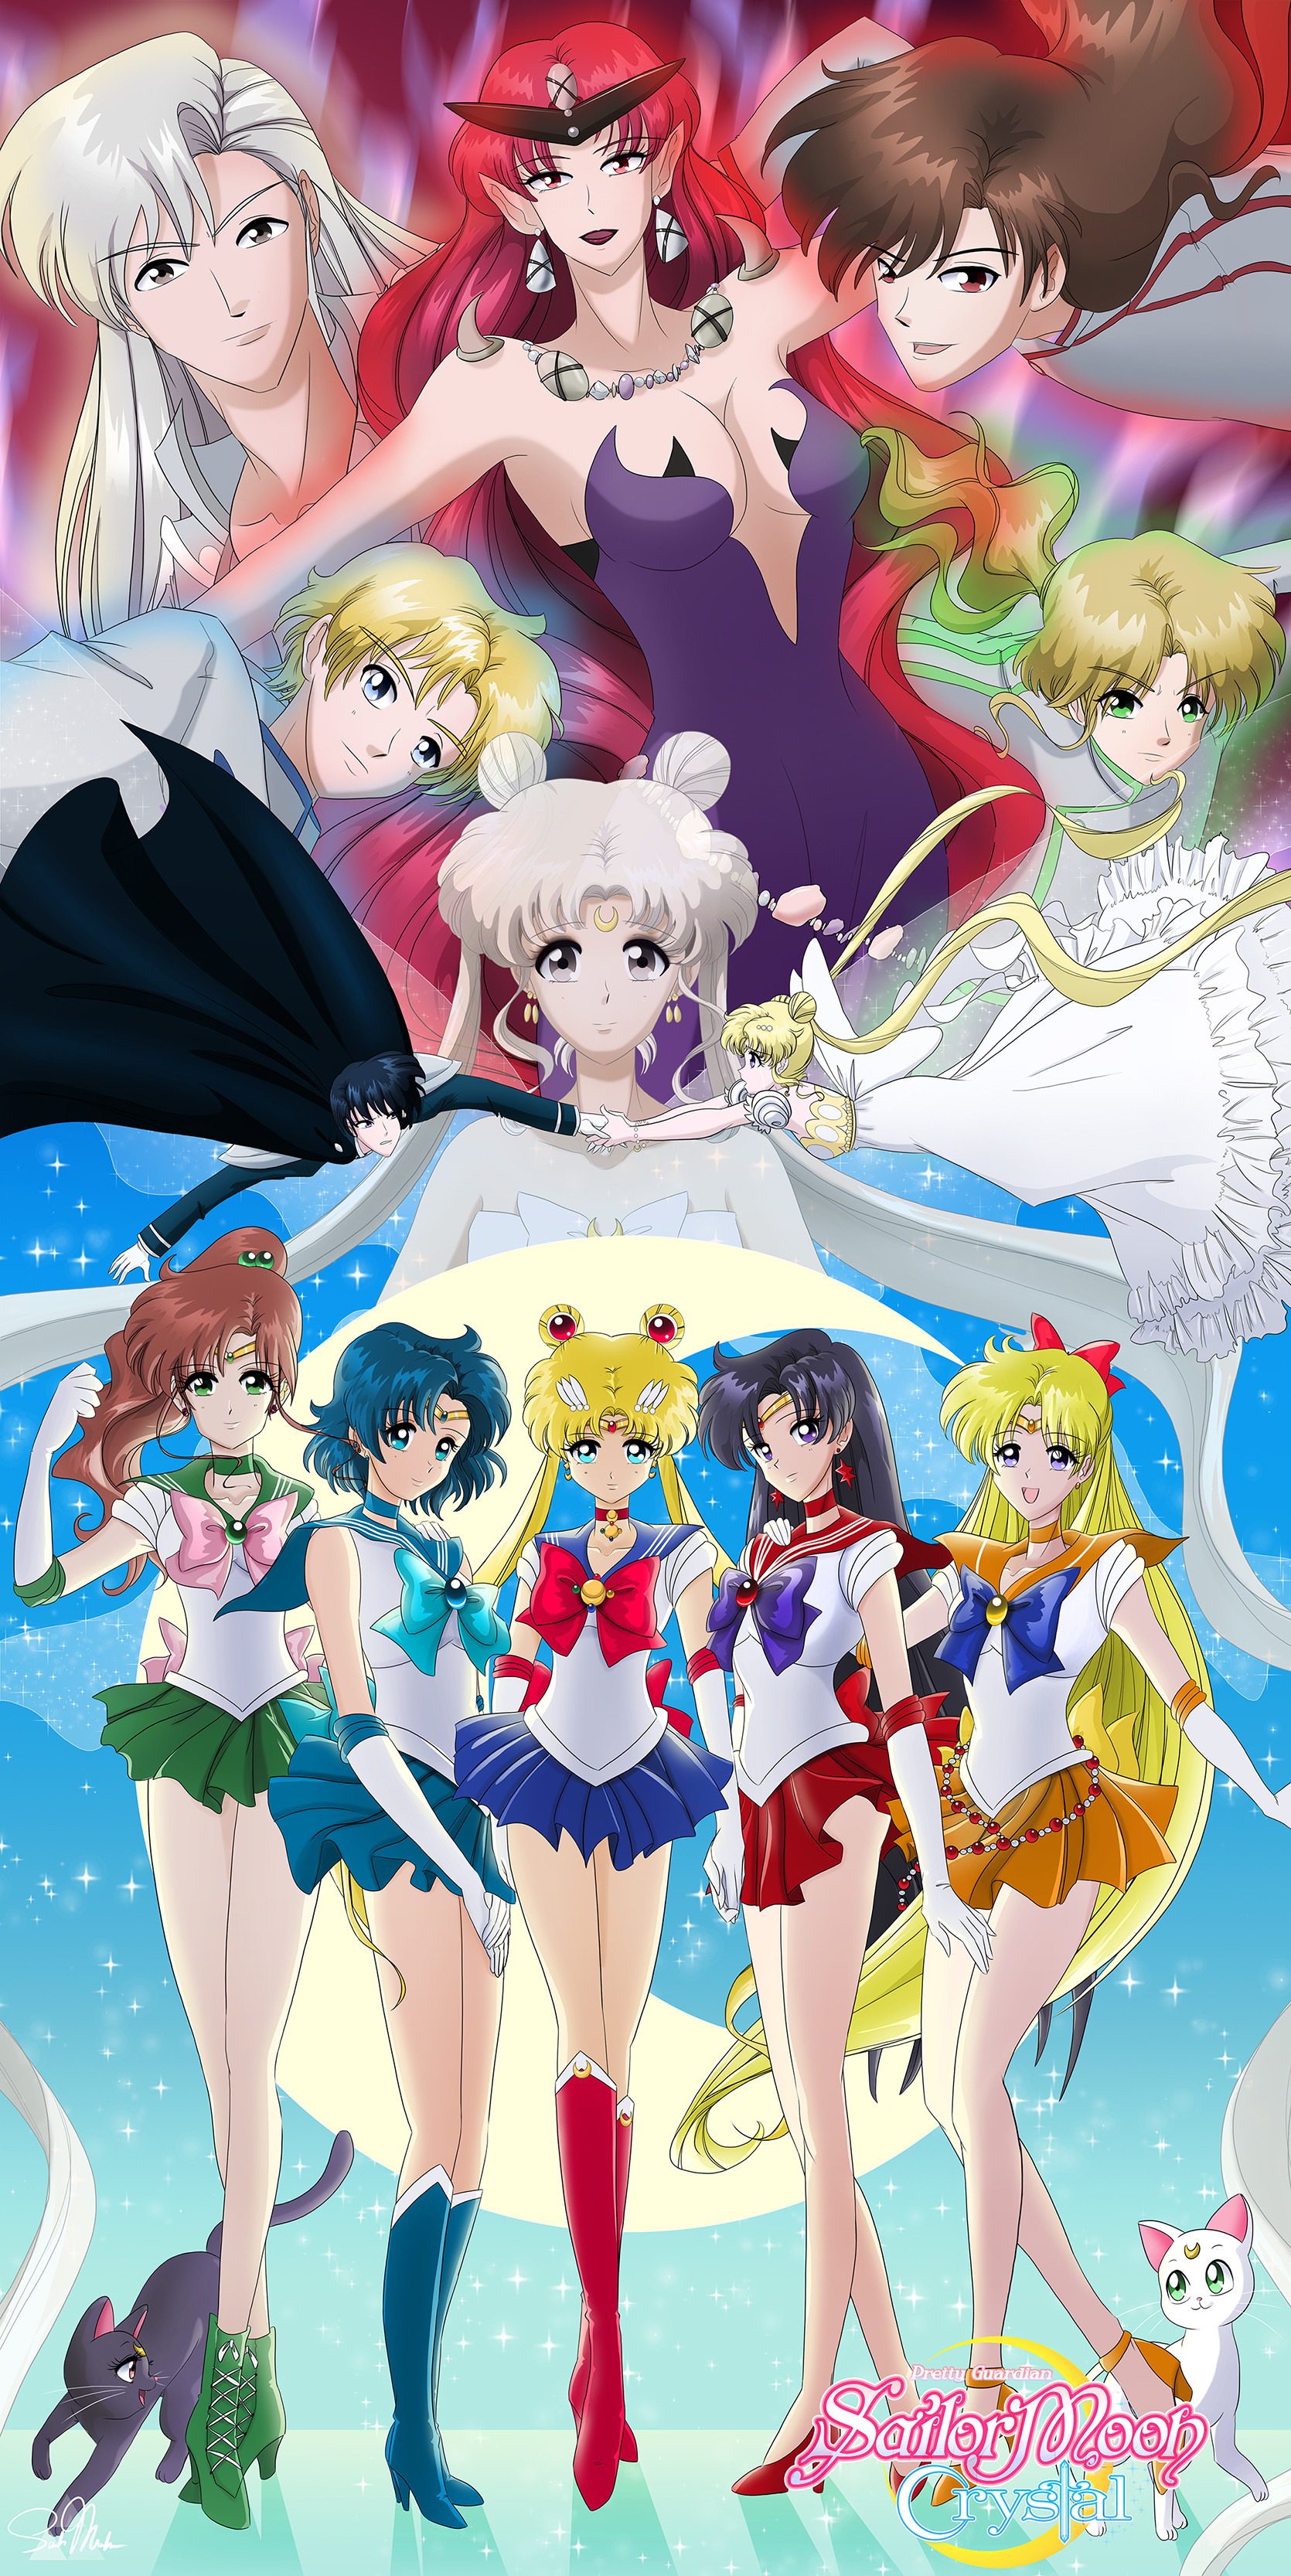 Anime Sailor Moon Crystal 1ª Temporada - Super Séries